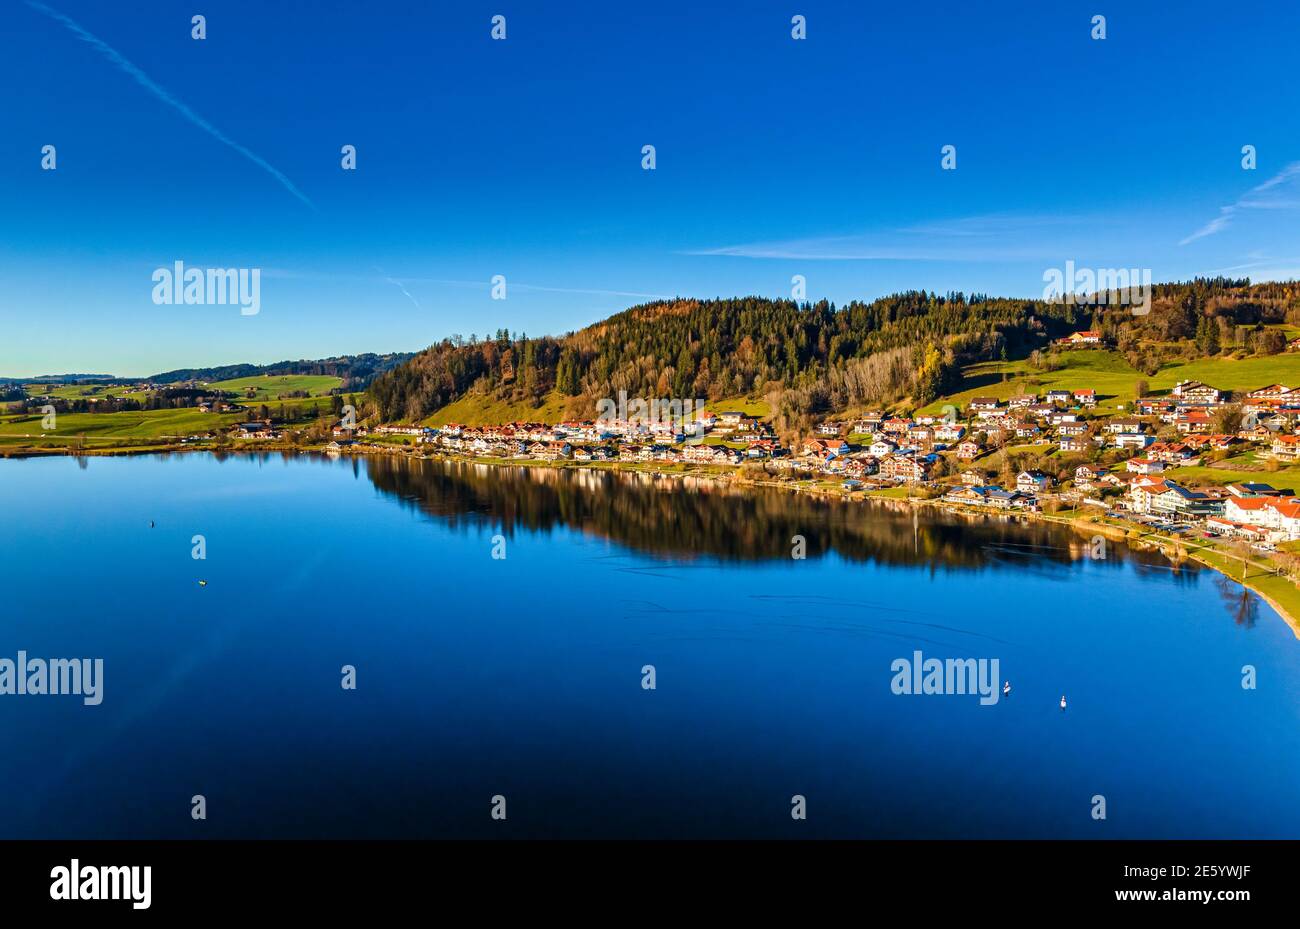 Hopfen am See, Hopfensee, near Fuessen, drone shot, Ostallgau, Allgau, Swabia, Alpine foreland, Bavaria, Germany, Europe Stock Photo